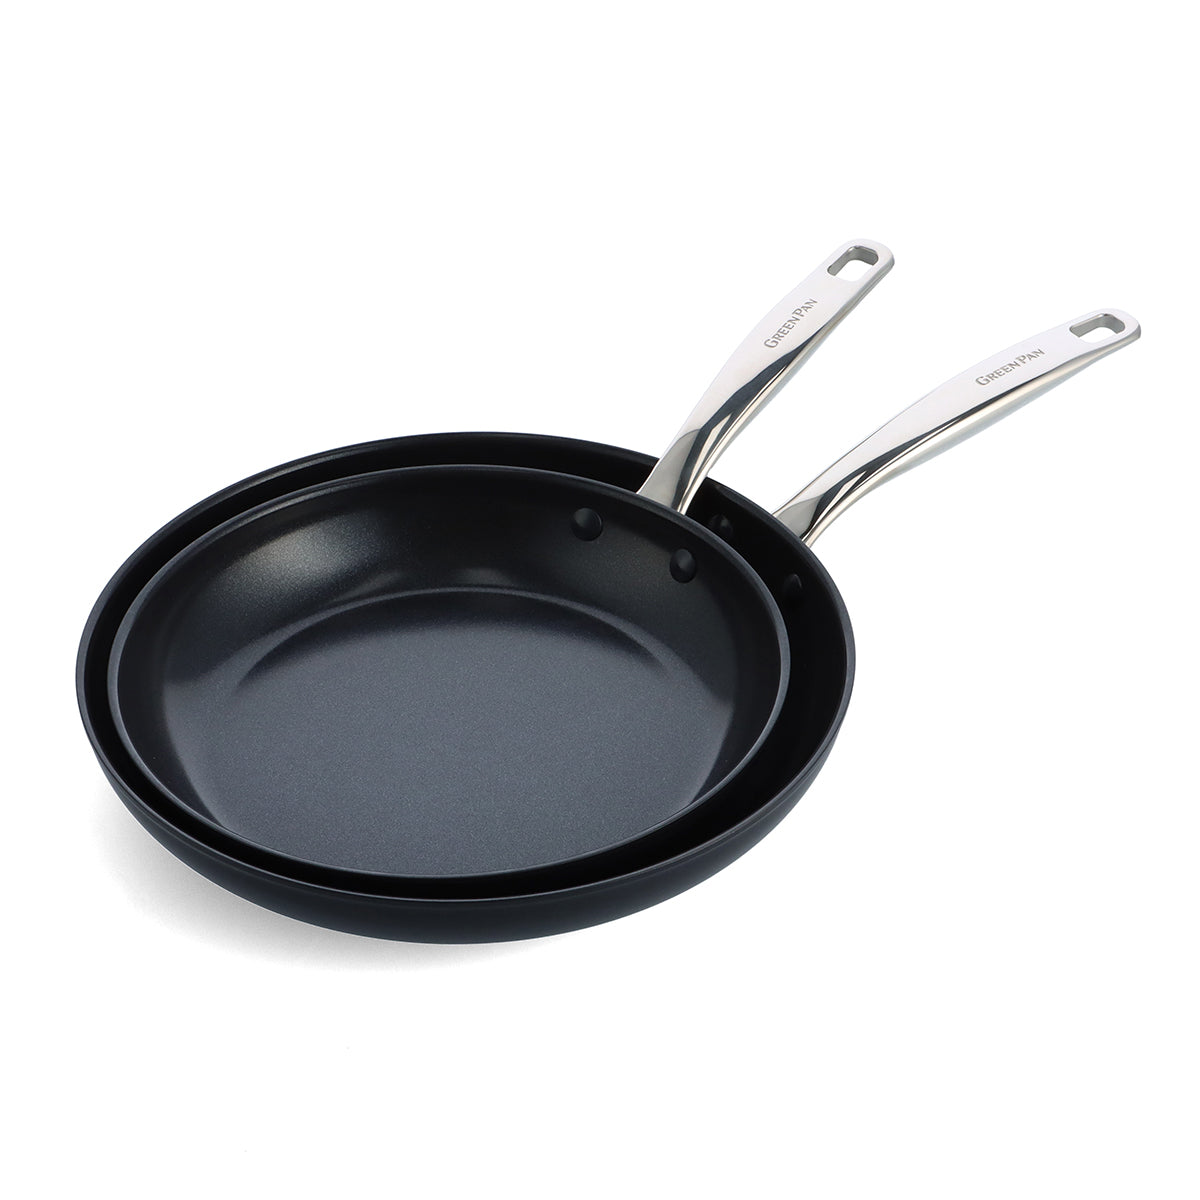 KitchenAid Hard Anodized Ceramic 5 qt. Aluminum Nonstick Saute Pan with Lid in Matte Black